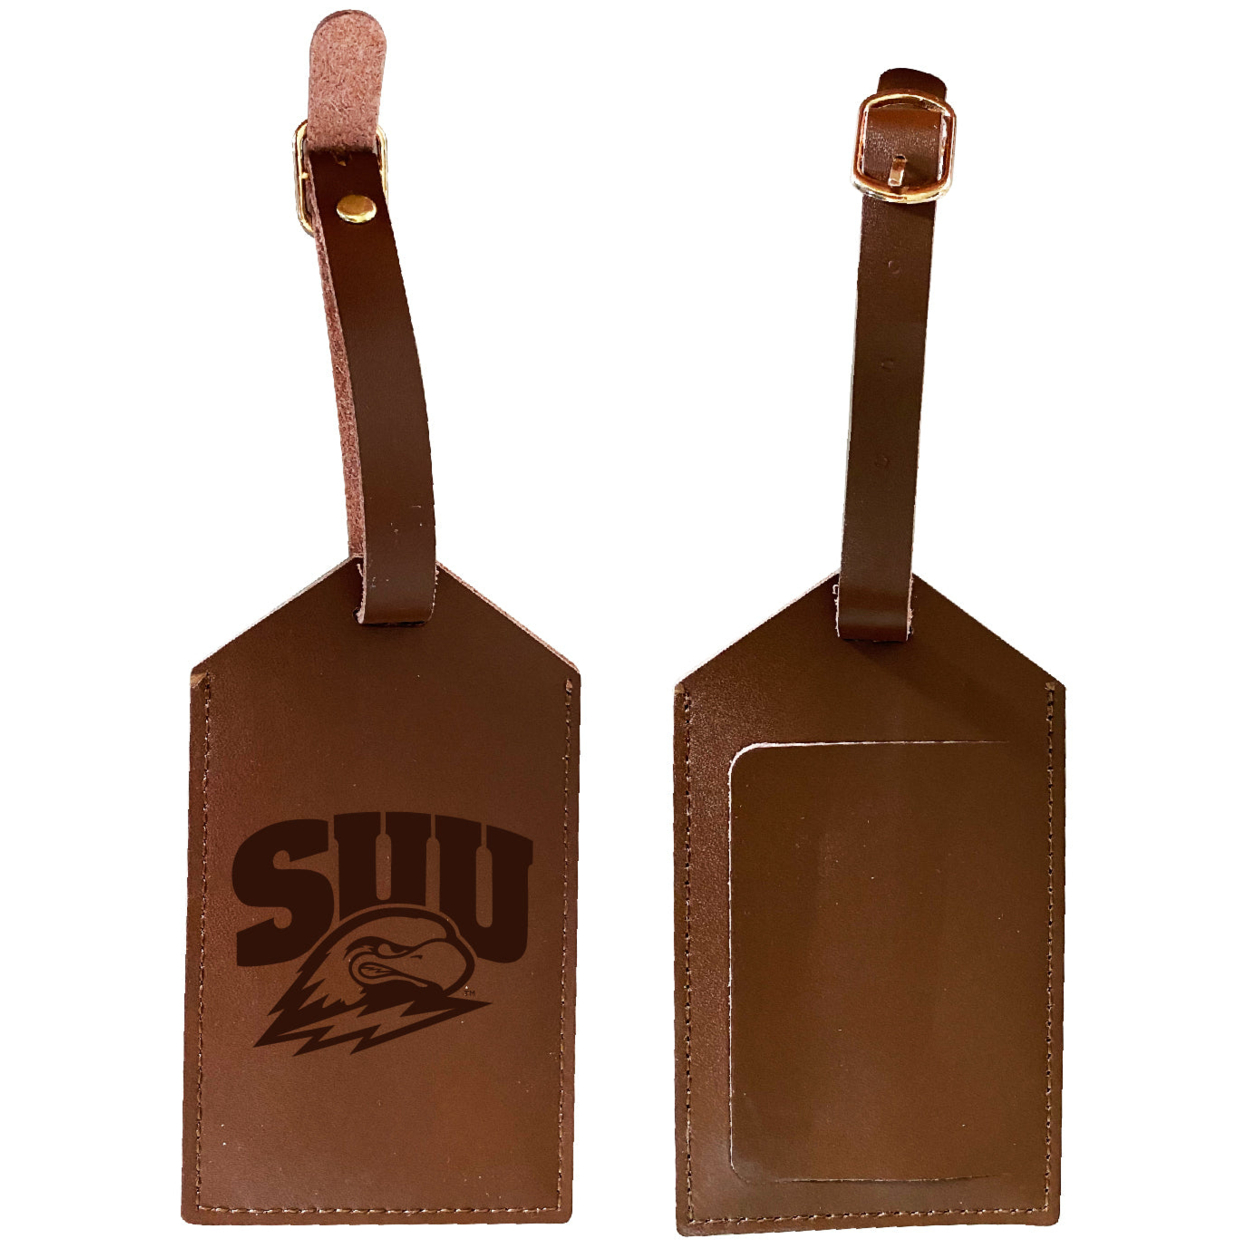 Southern Utah University Leather Luggage Tag Engraved